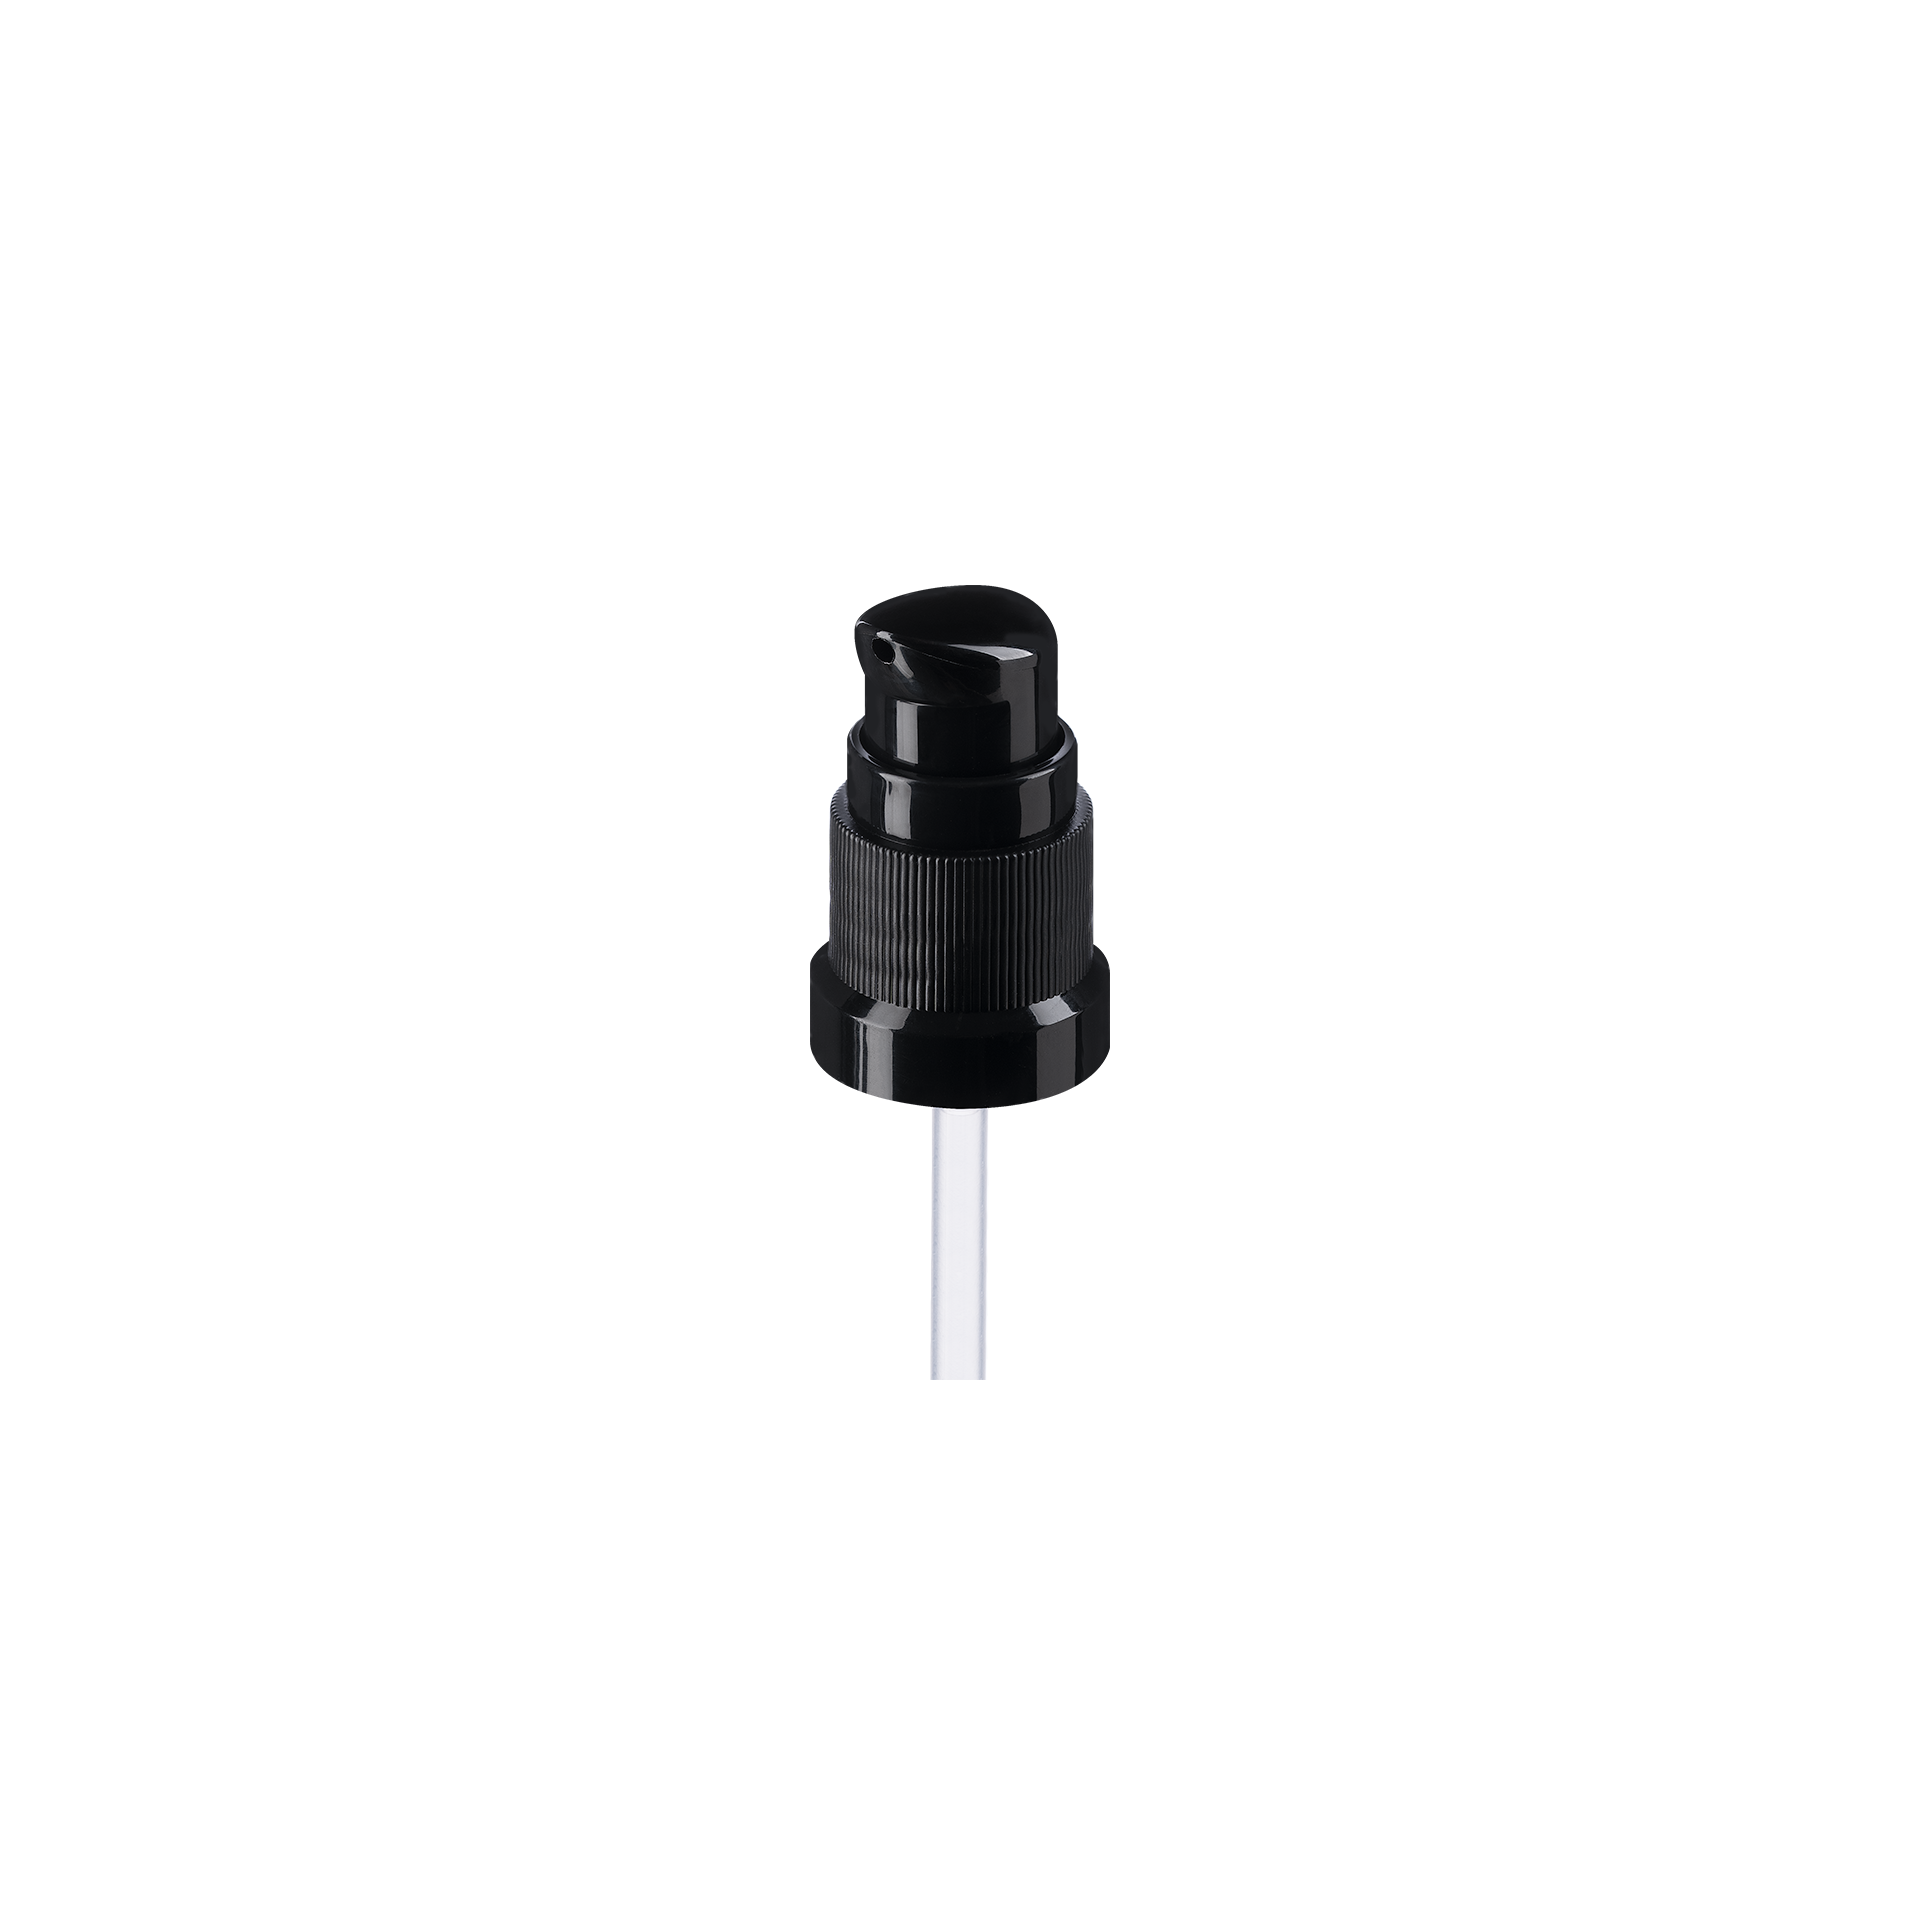 Lotion pump Metropolitan DIN18, PP, black, dose 0.15ml, black security clip (Ginger 5)